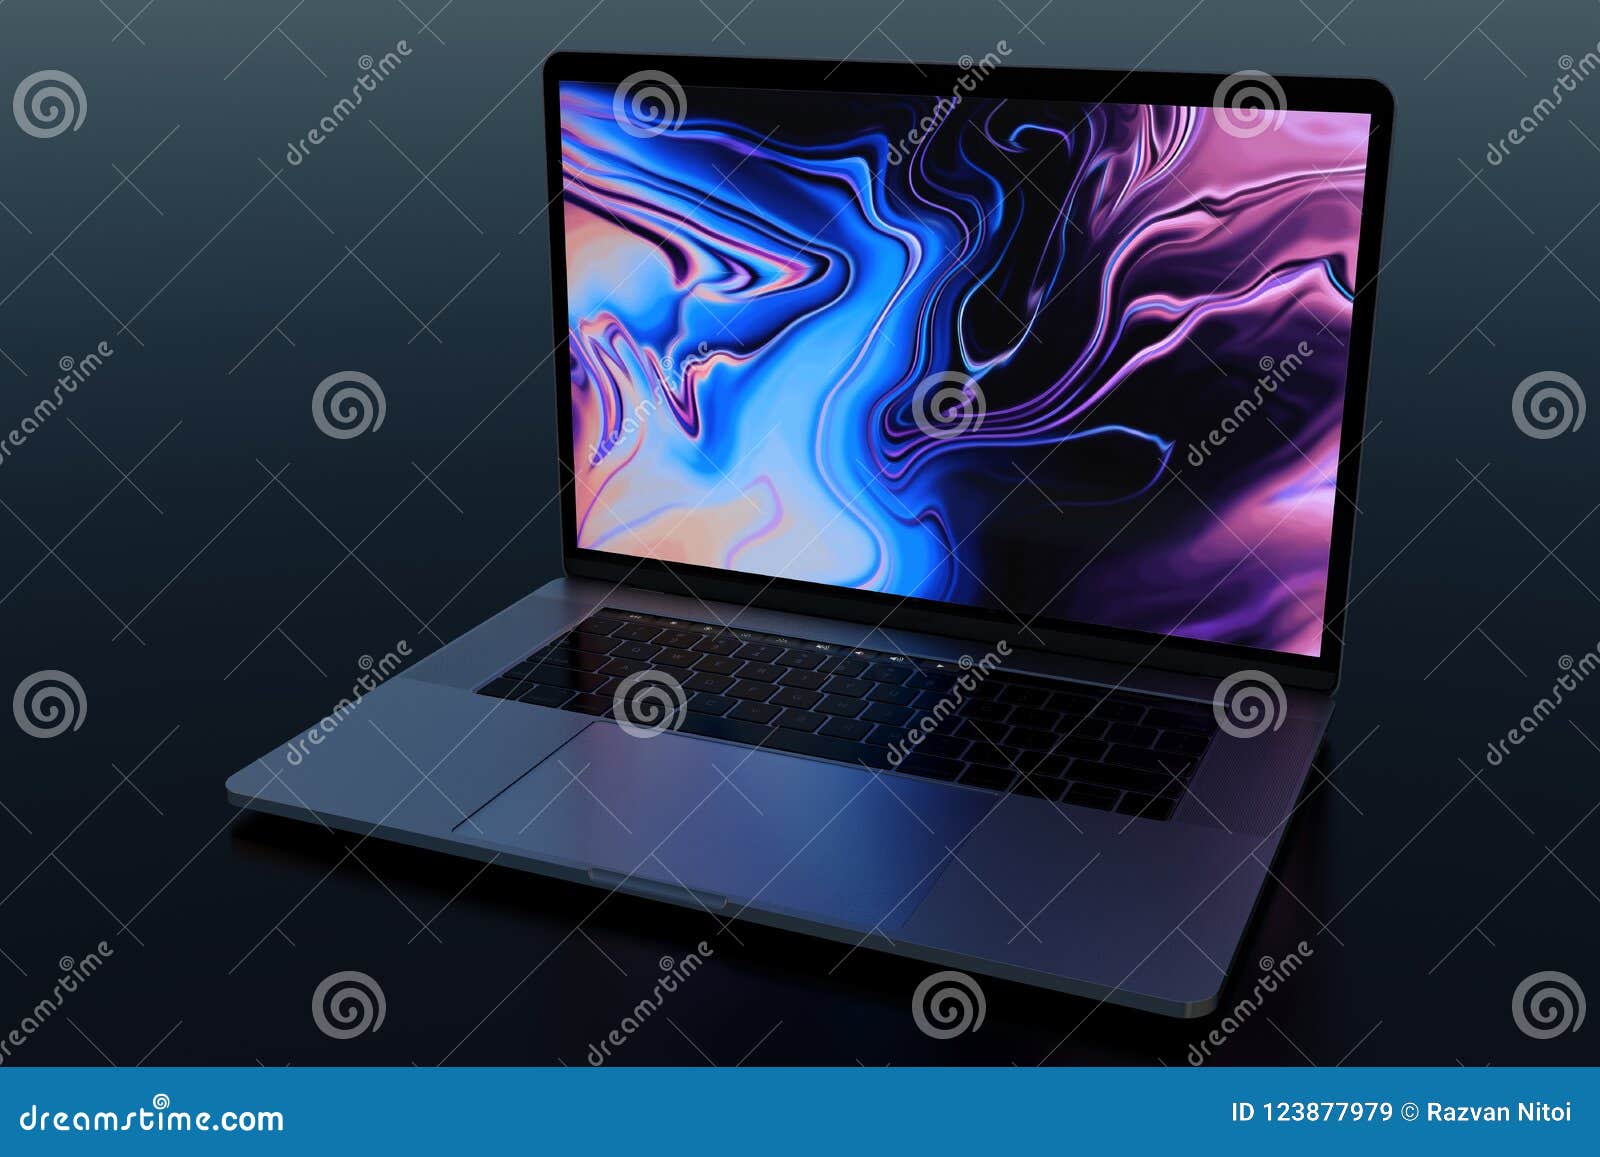 macbook pro 15`` similar laptop computer in dark scene